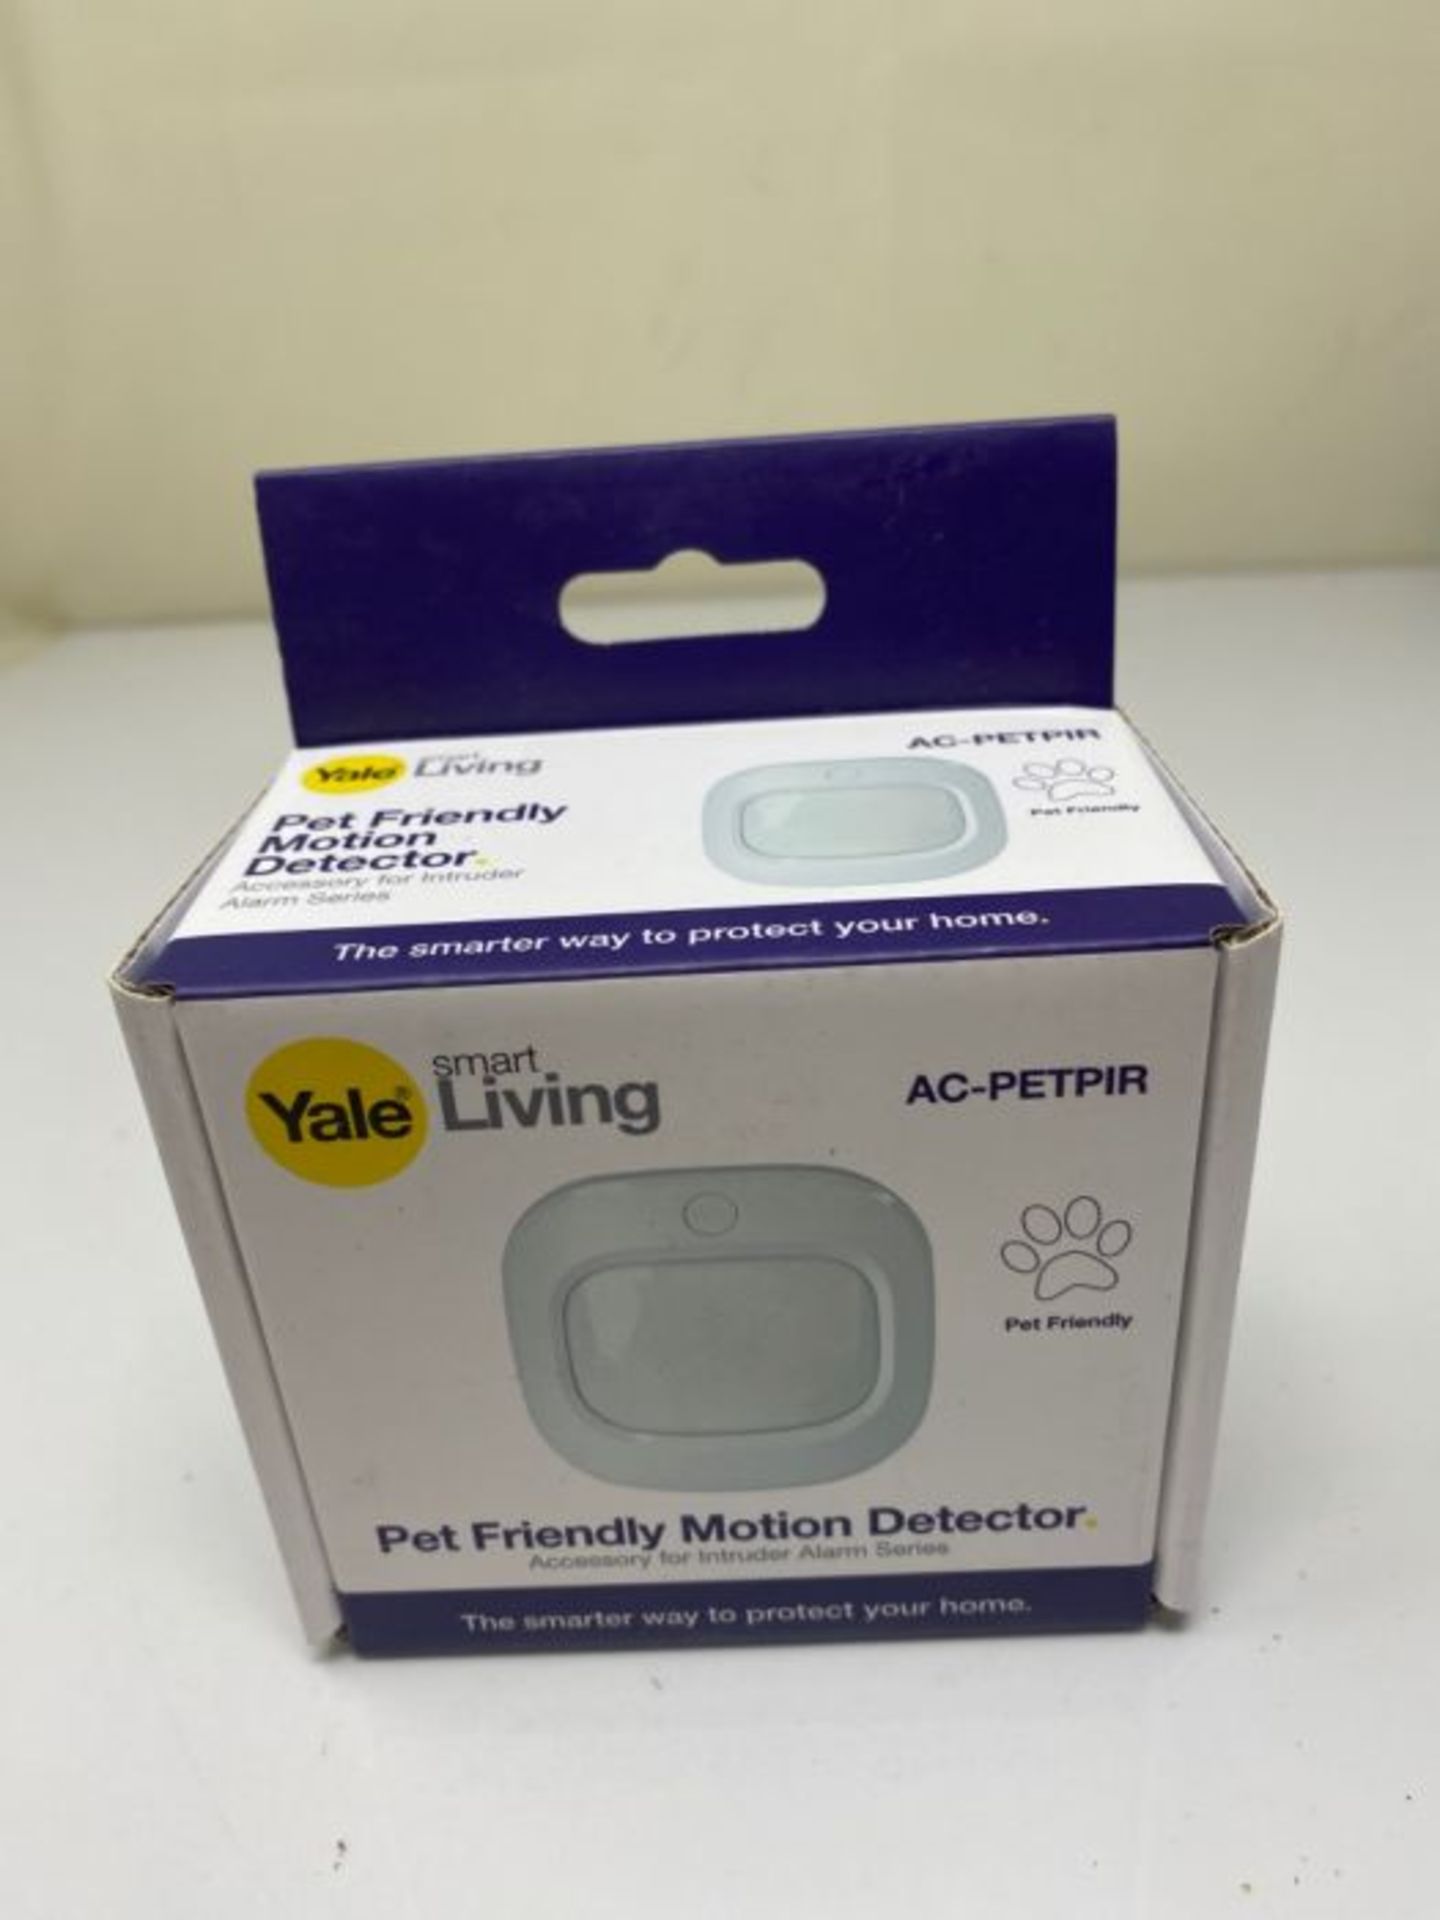 Yale AC-PETPIR Alarm Pet Friendly Motion Detector - Sync Smart Home Alarm -200 m range - Image 2 of 3